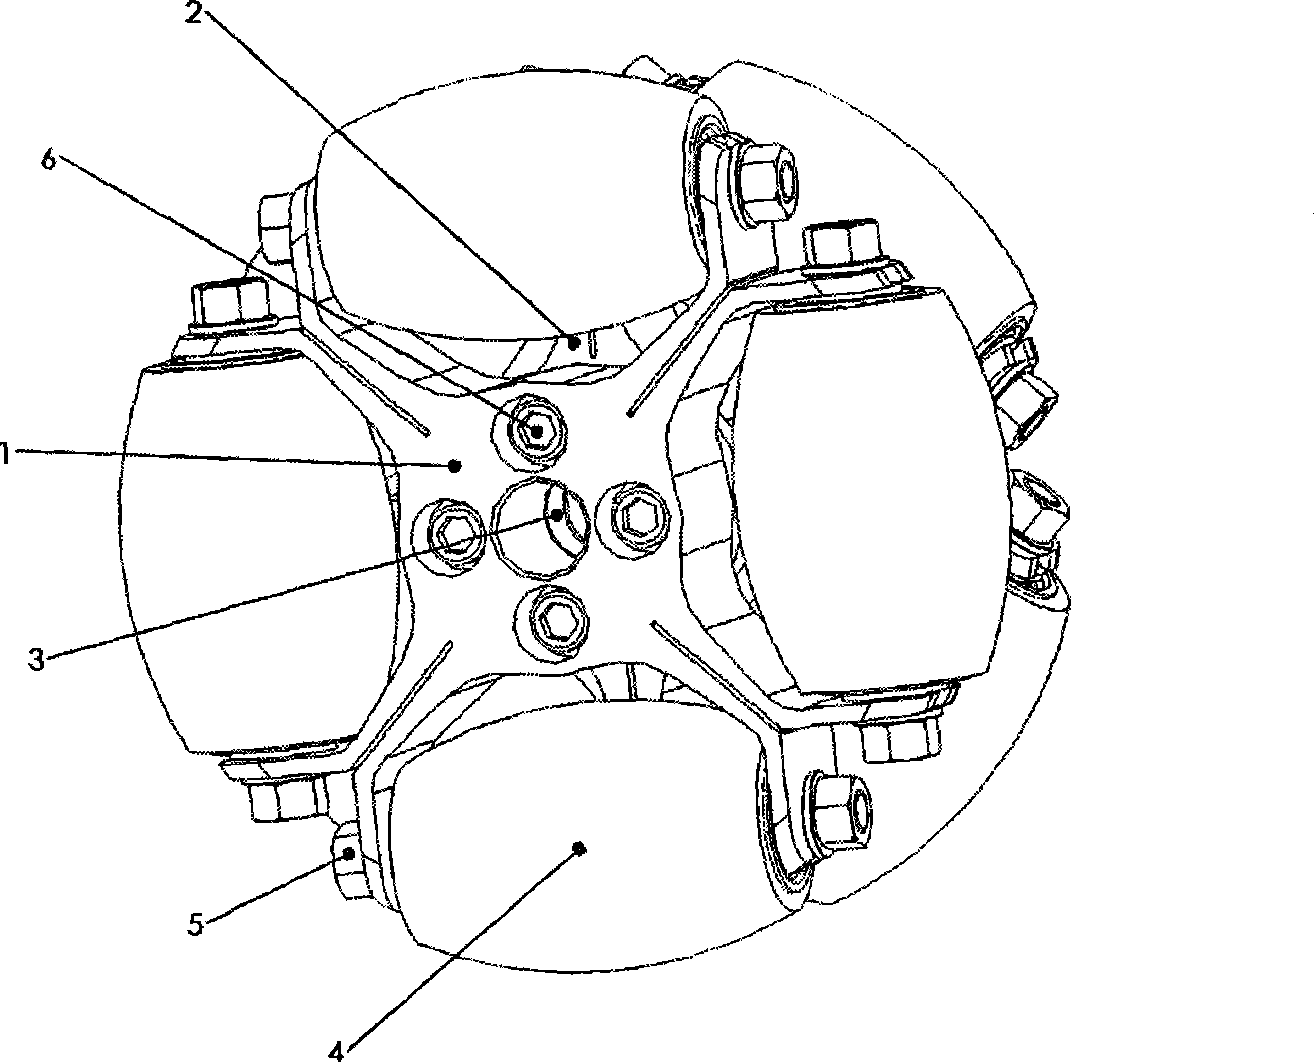 Omnidirectional wheel structure